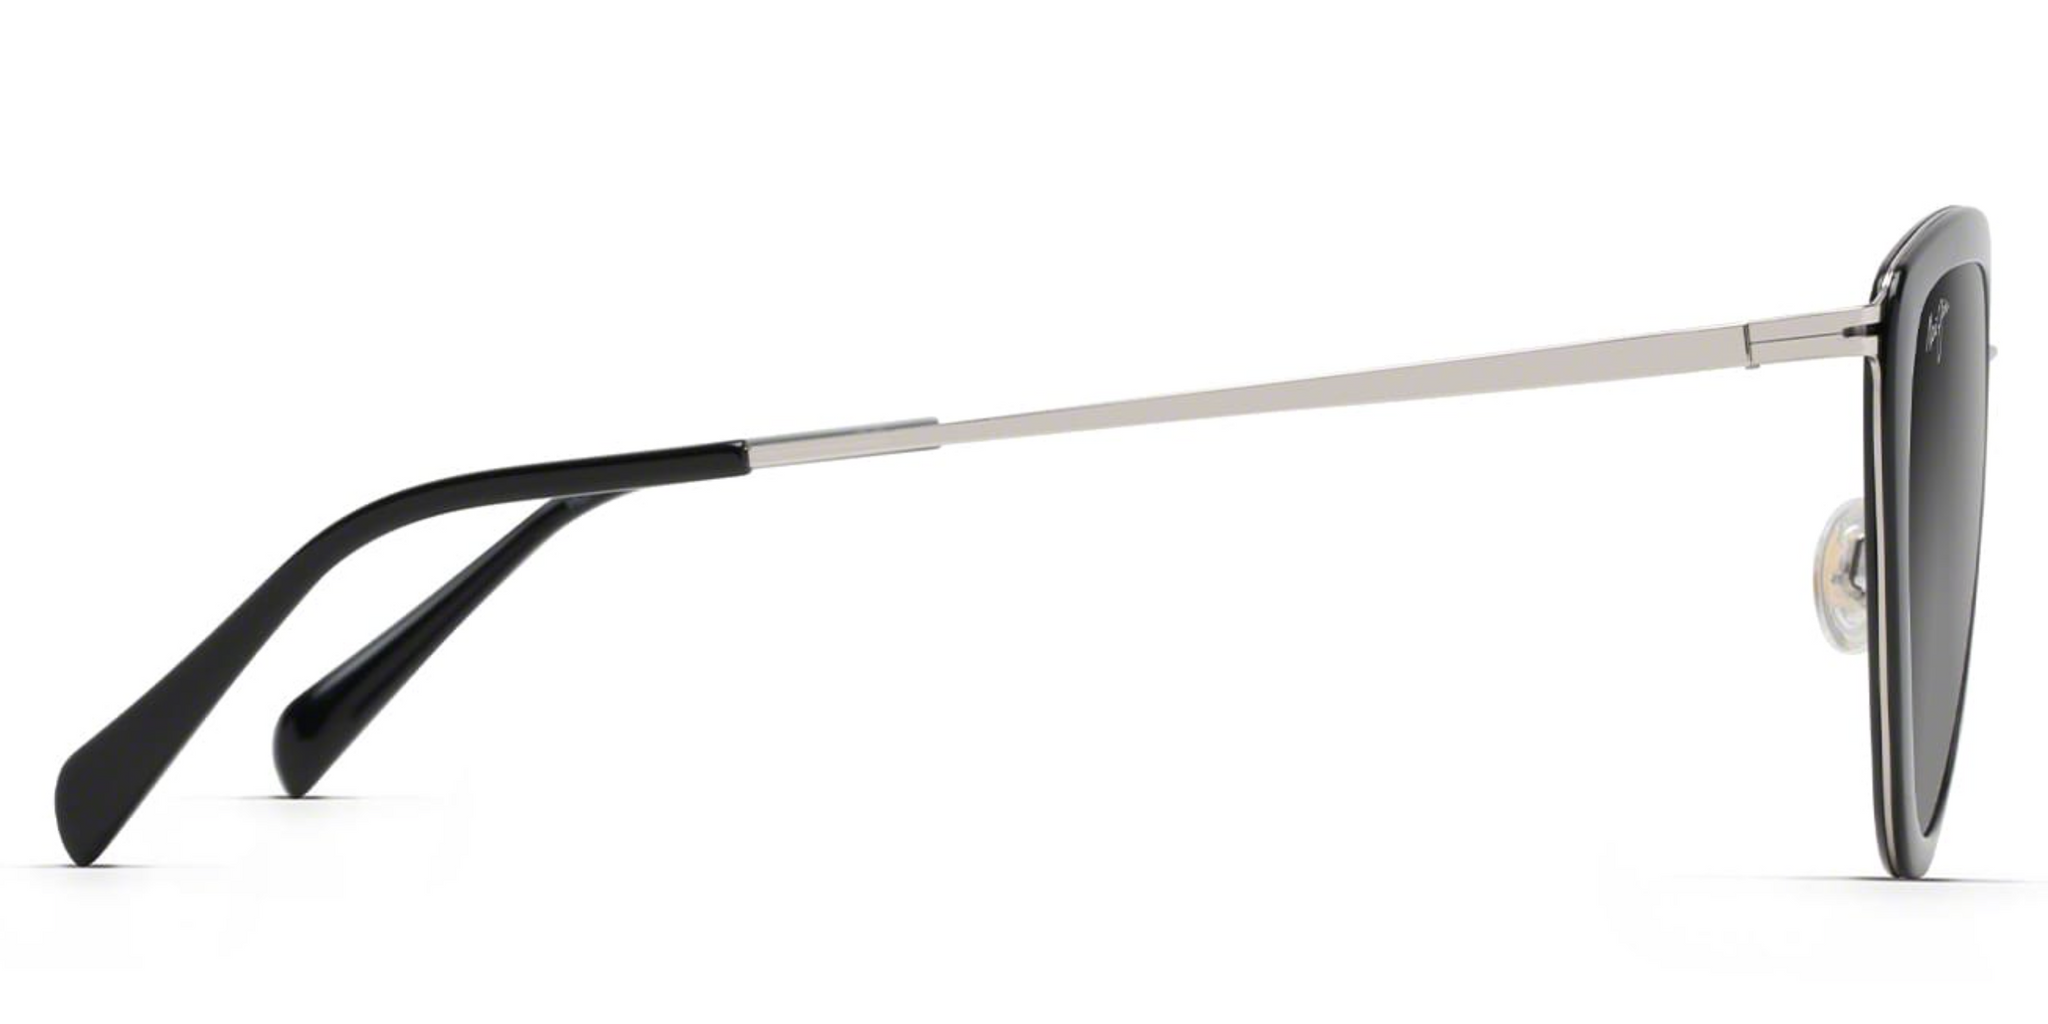 Maui Jim Hunakai 331 Sunglasses: Models: HS331-10, GS331-02, RS331-05 -  Flight Sunglasses